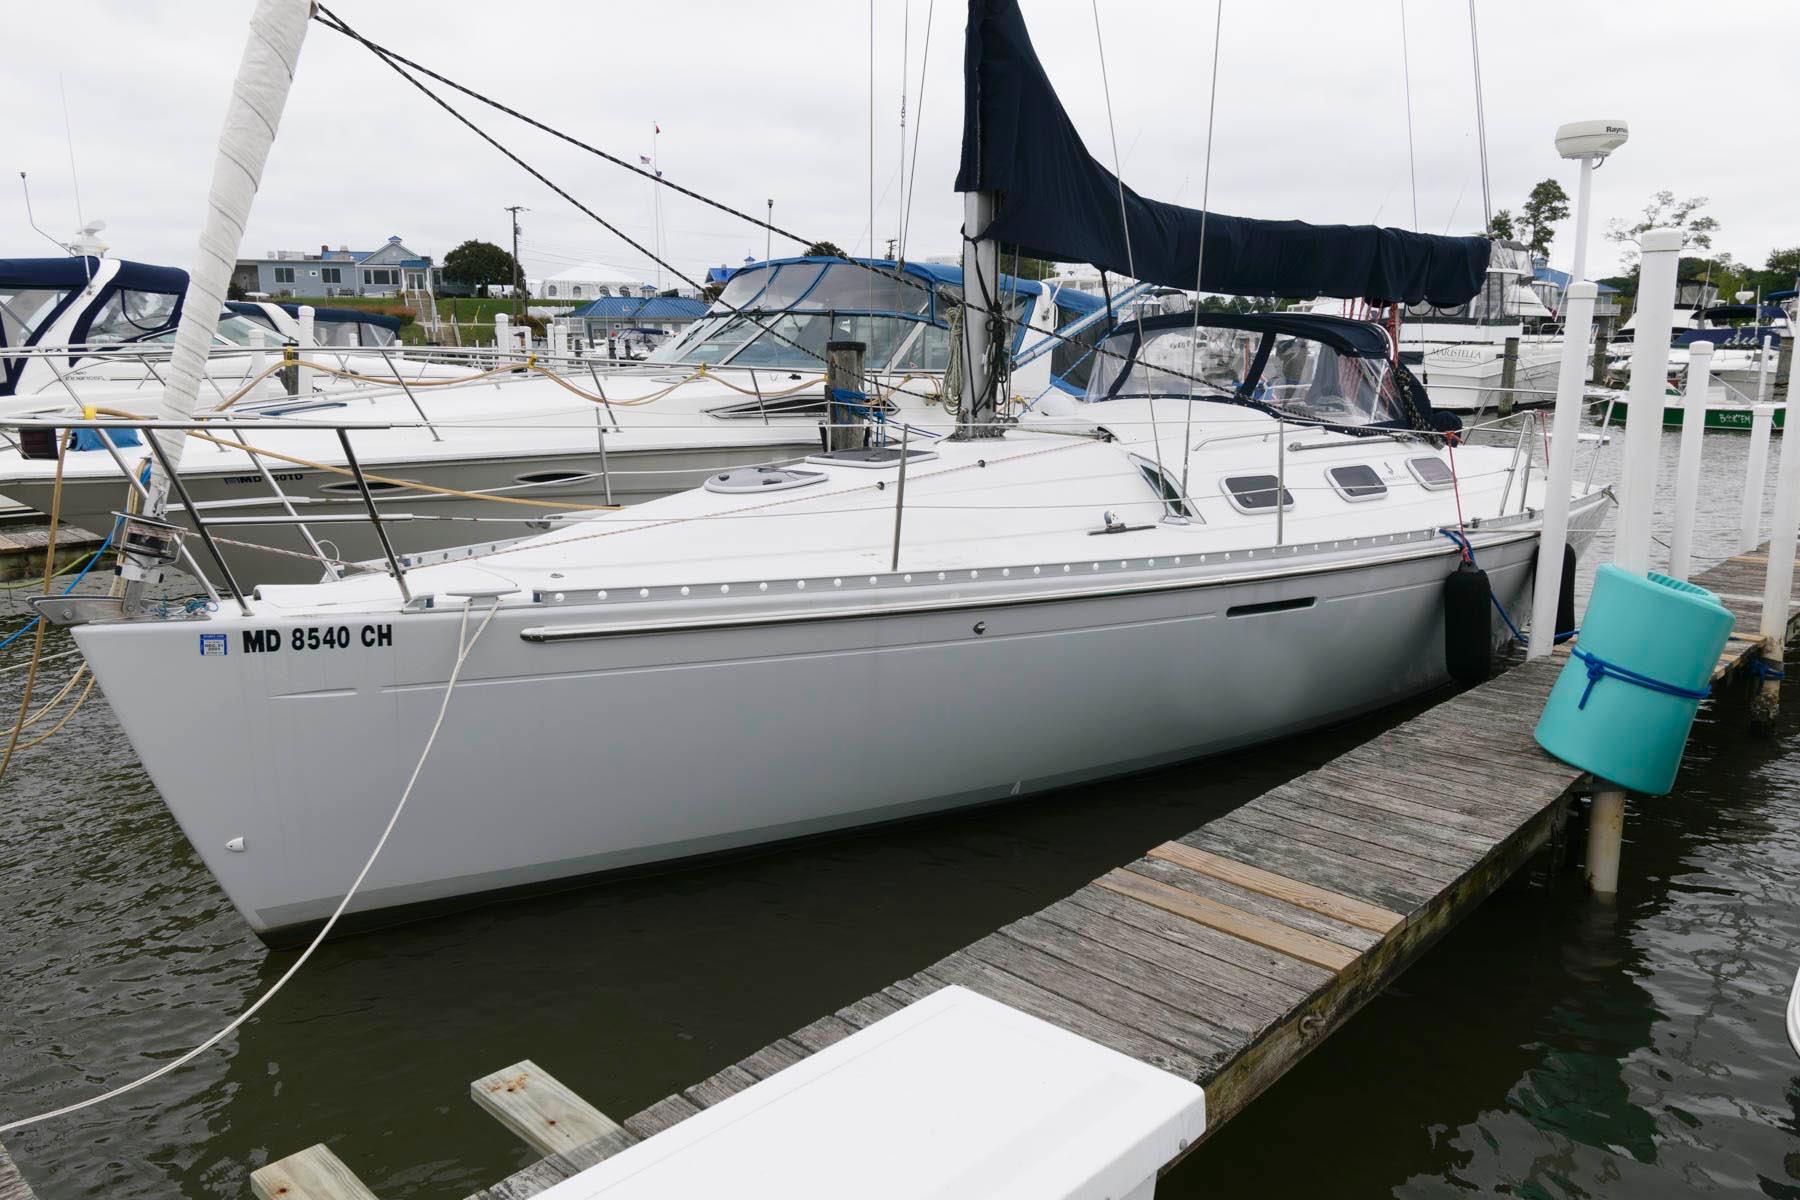 M 6583 CF Knot 10 Yacht Sales